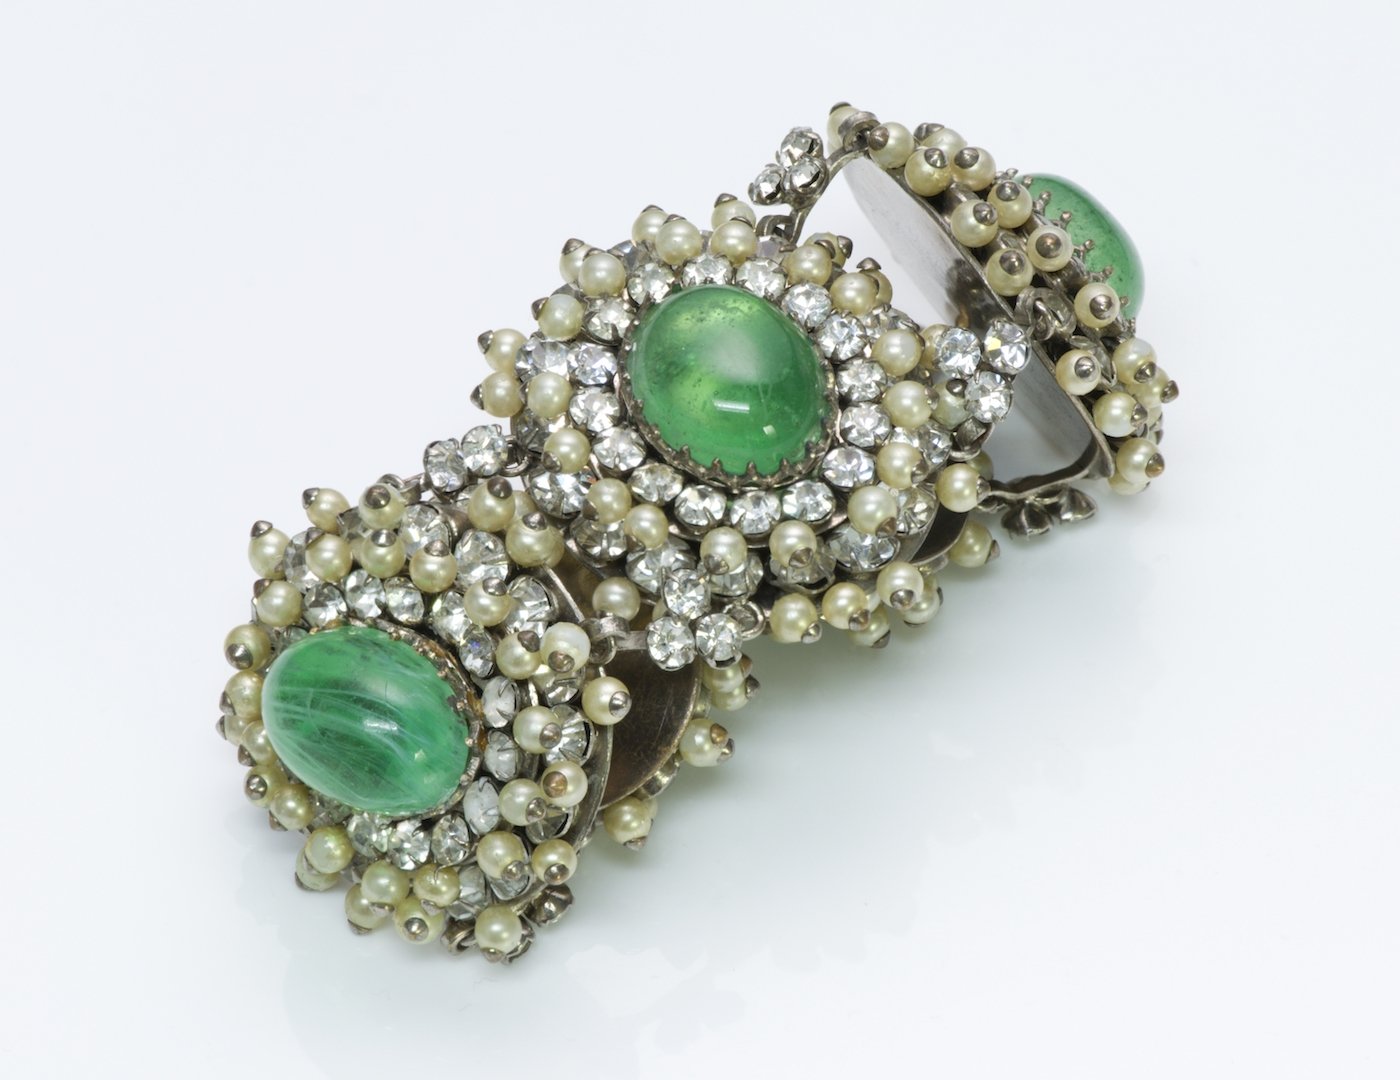 cristobal-balenciaga-goossens-1950-s-pearl-poured-glass-bracelet